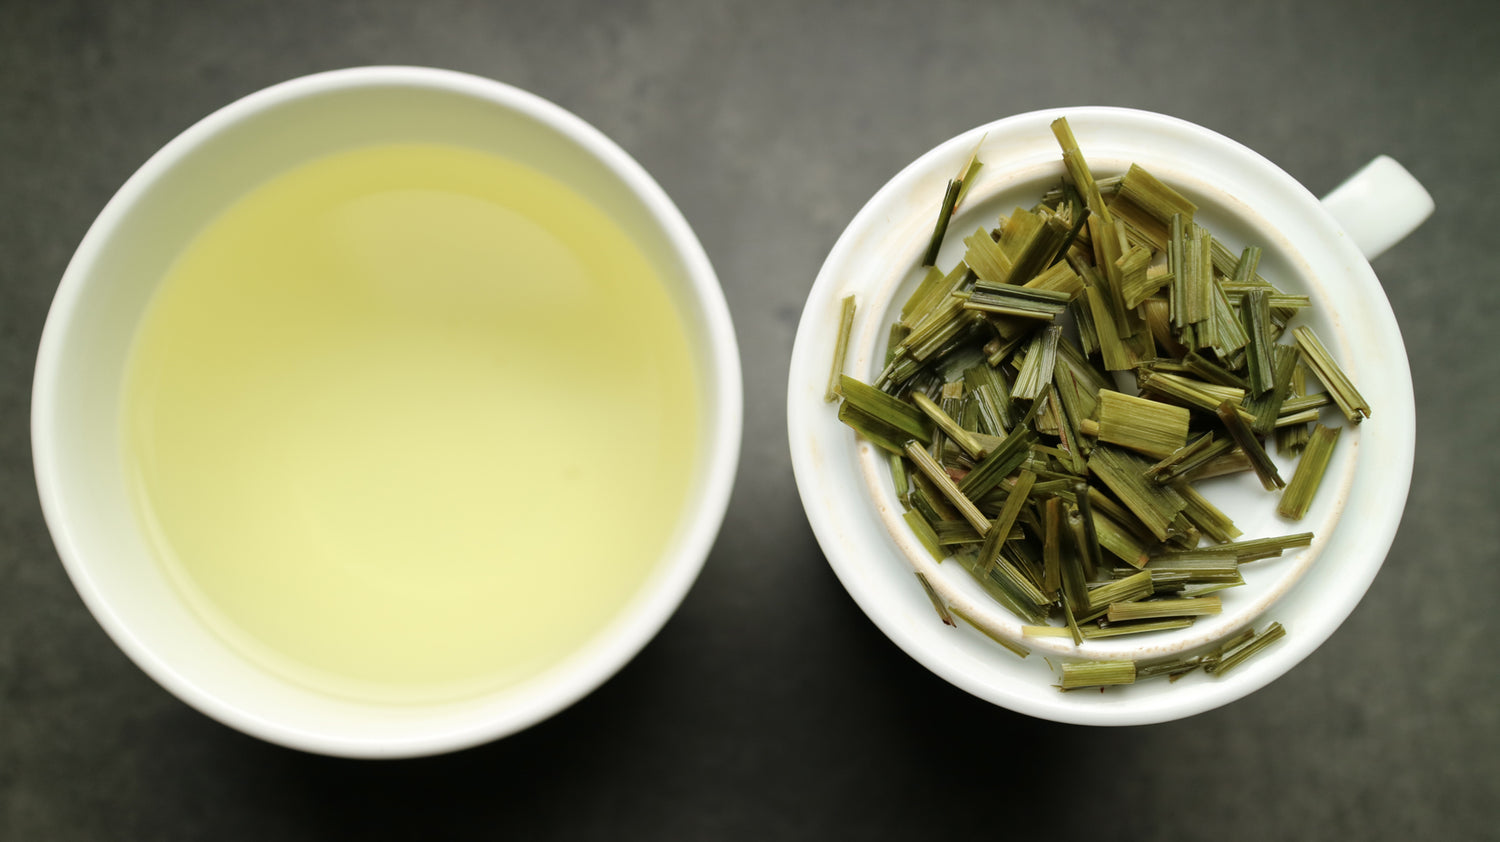 Loose Leaf Herbal Tea "Lemongrass"